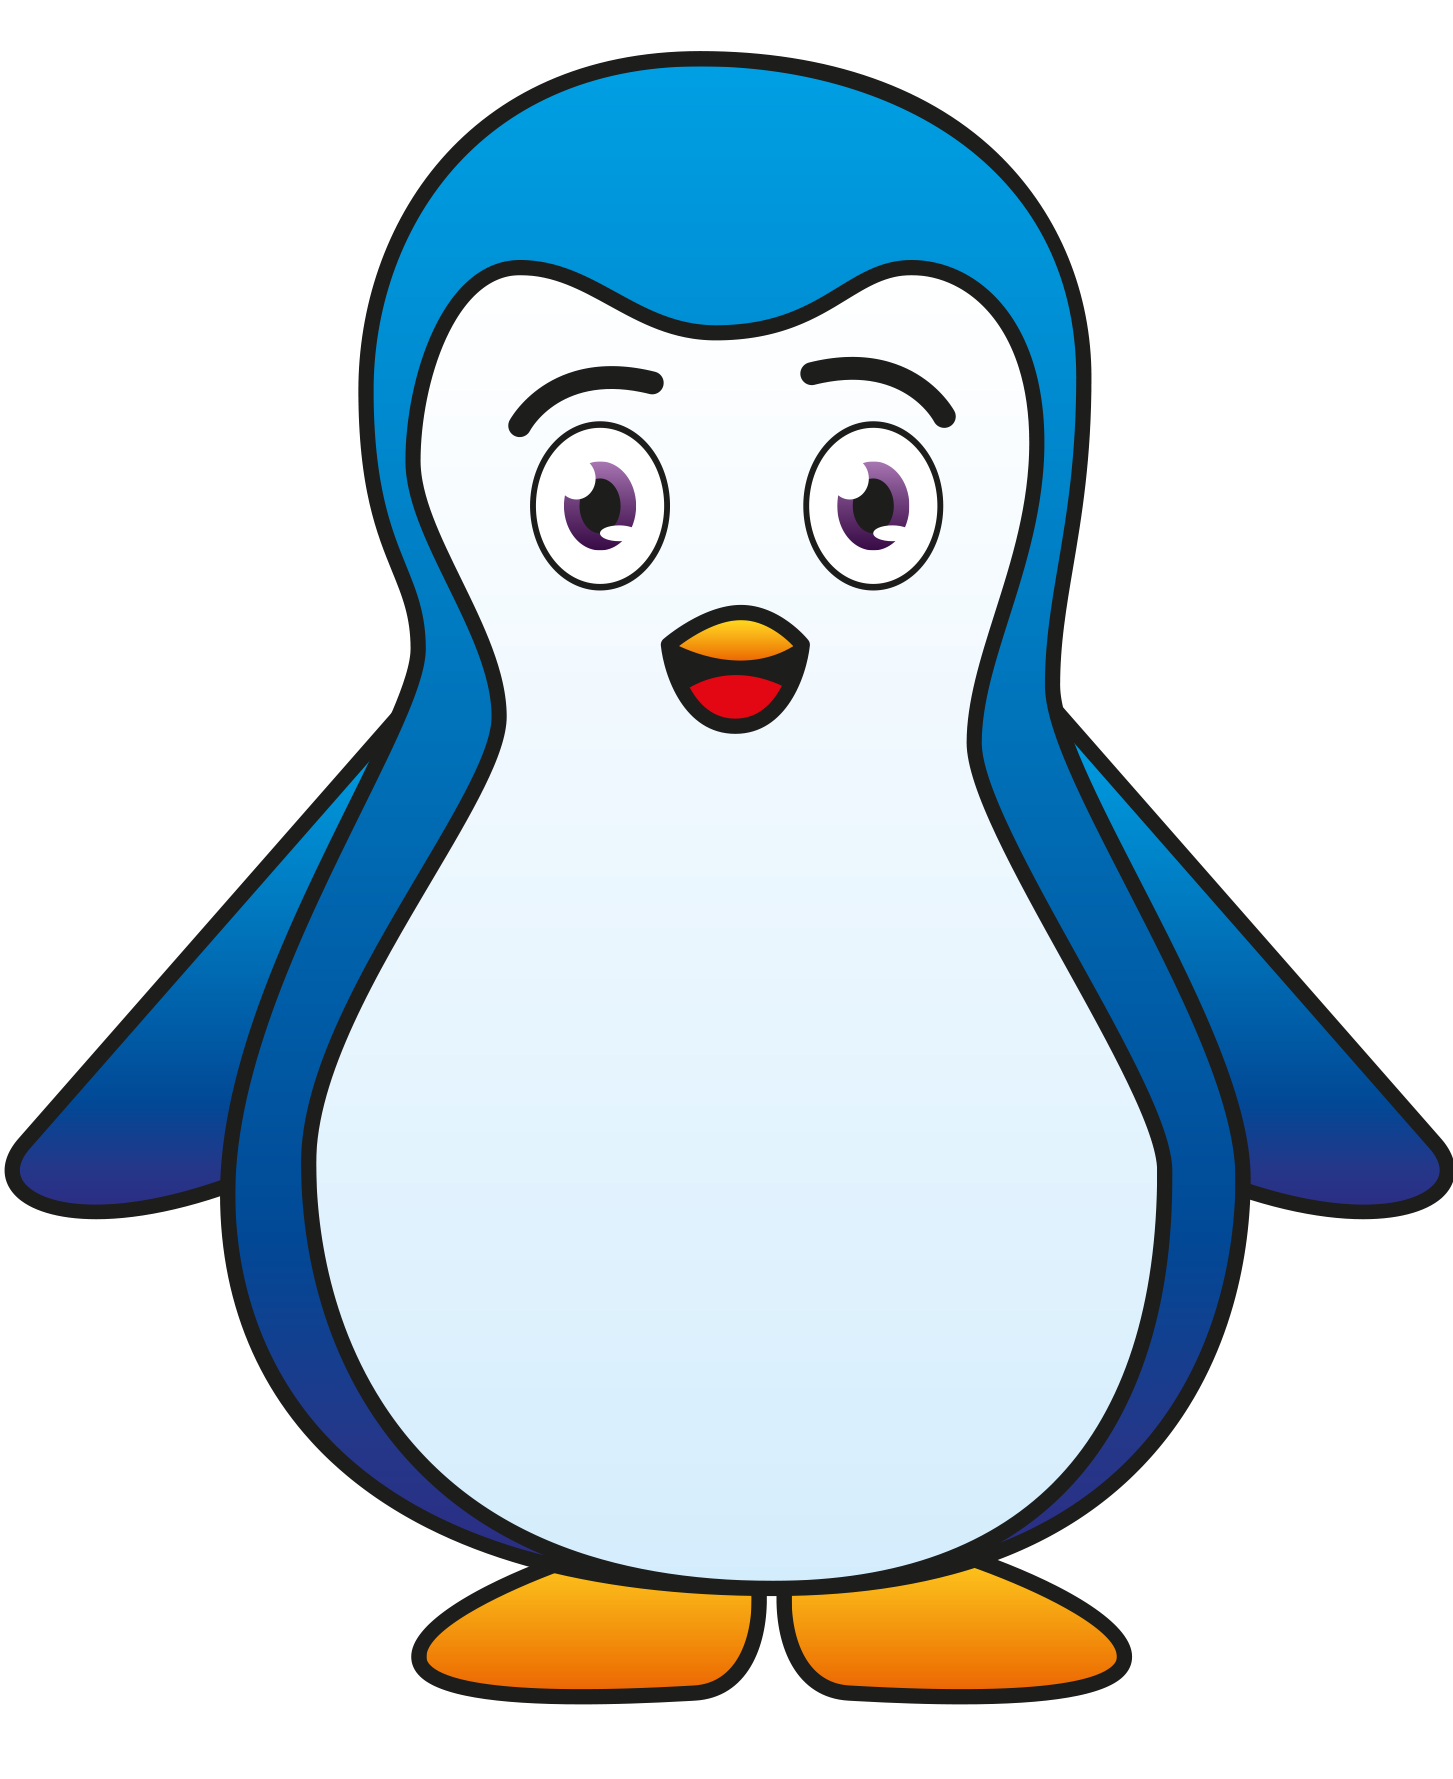 Download PNG image - Cute Penguin PNG Transparent Image 